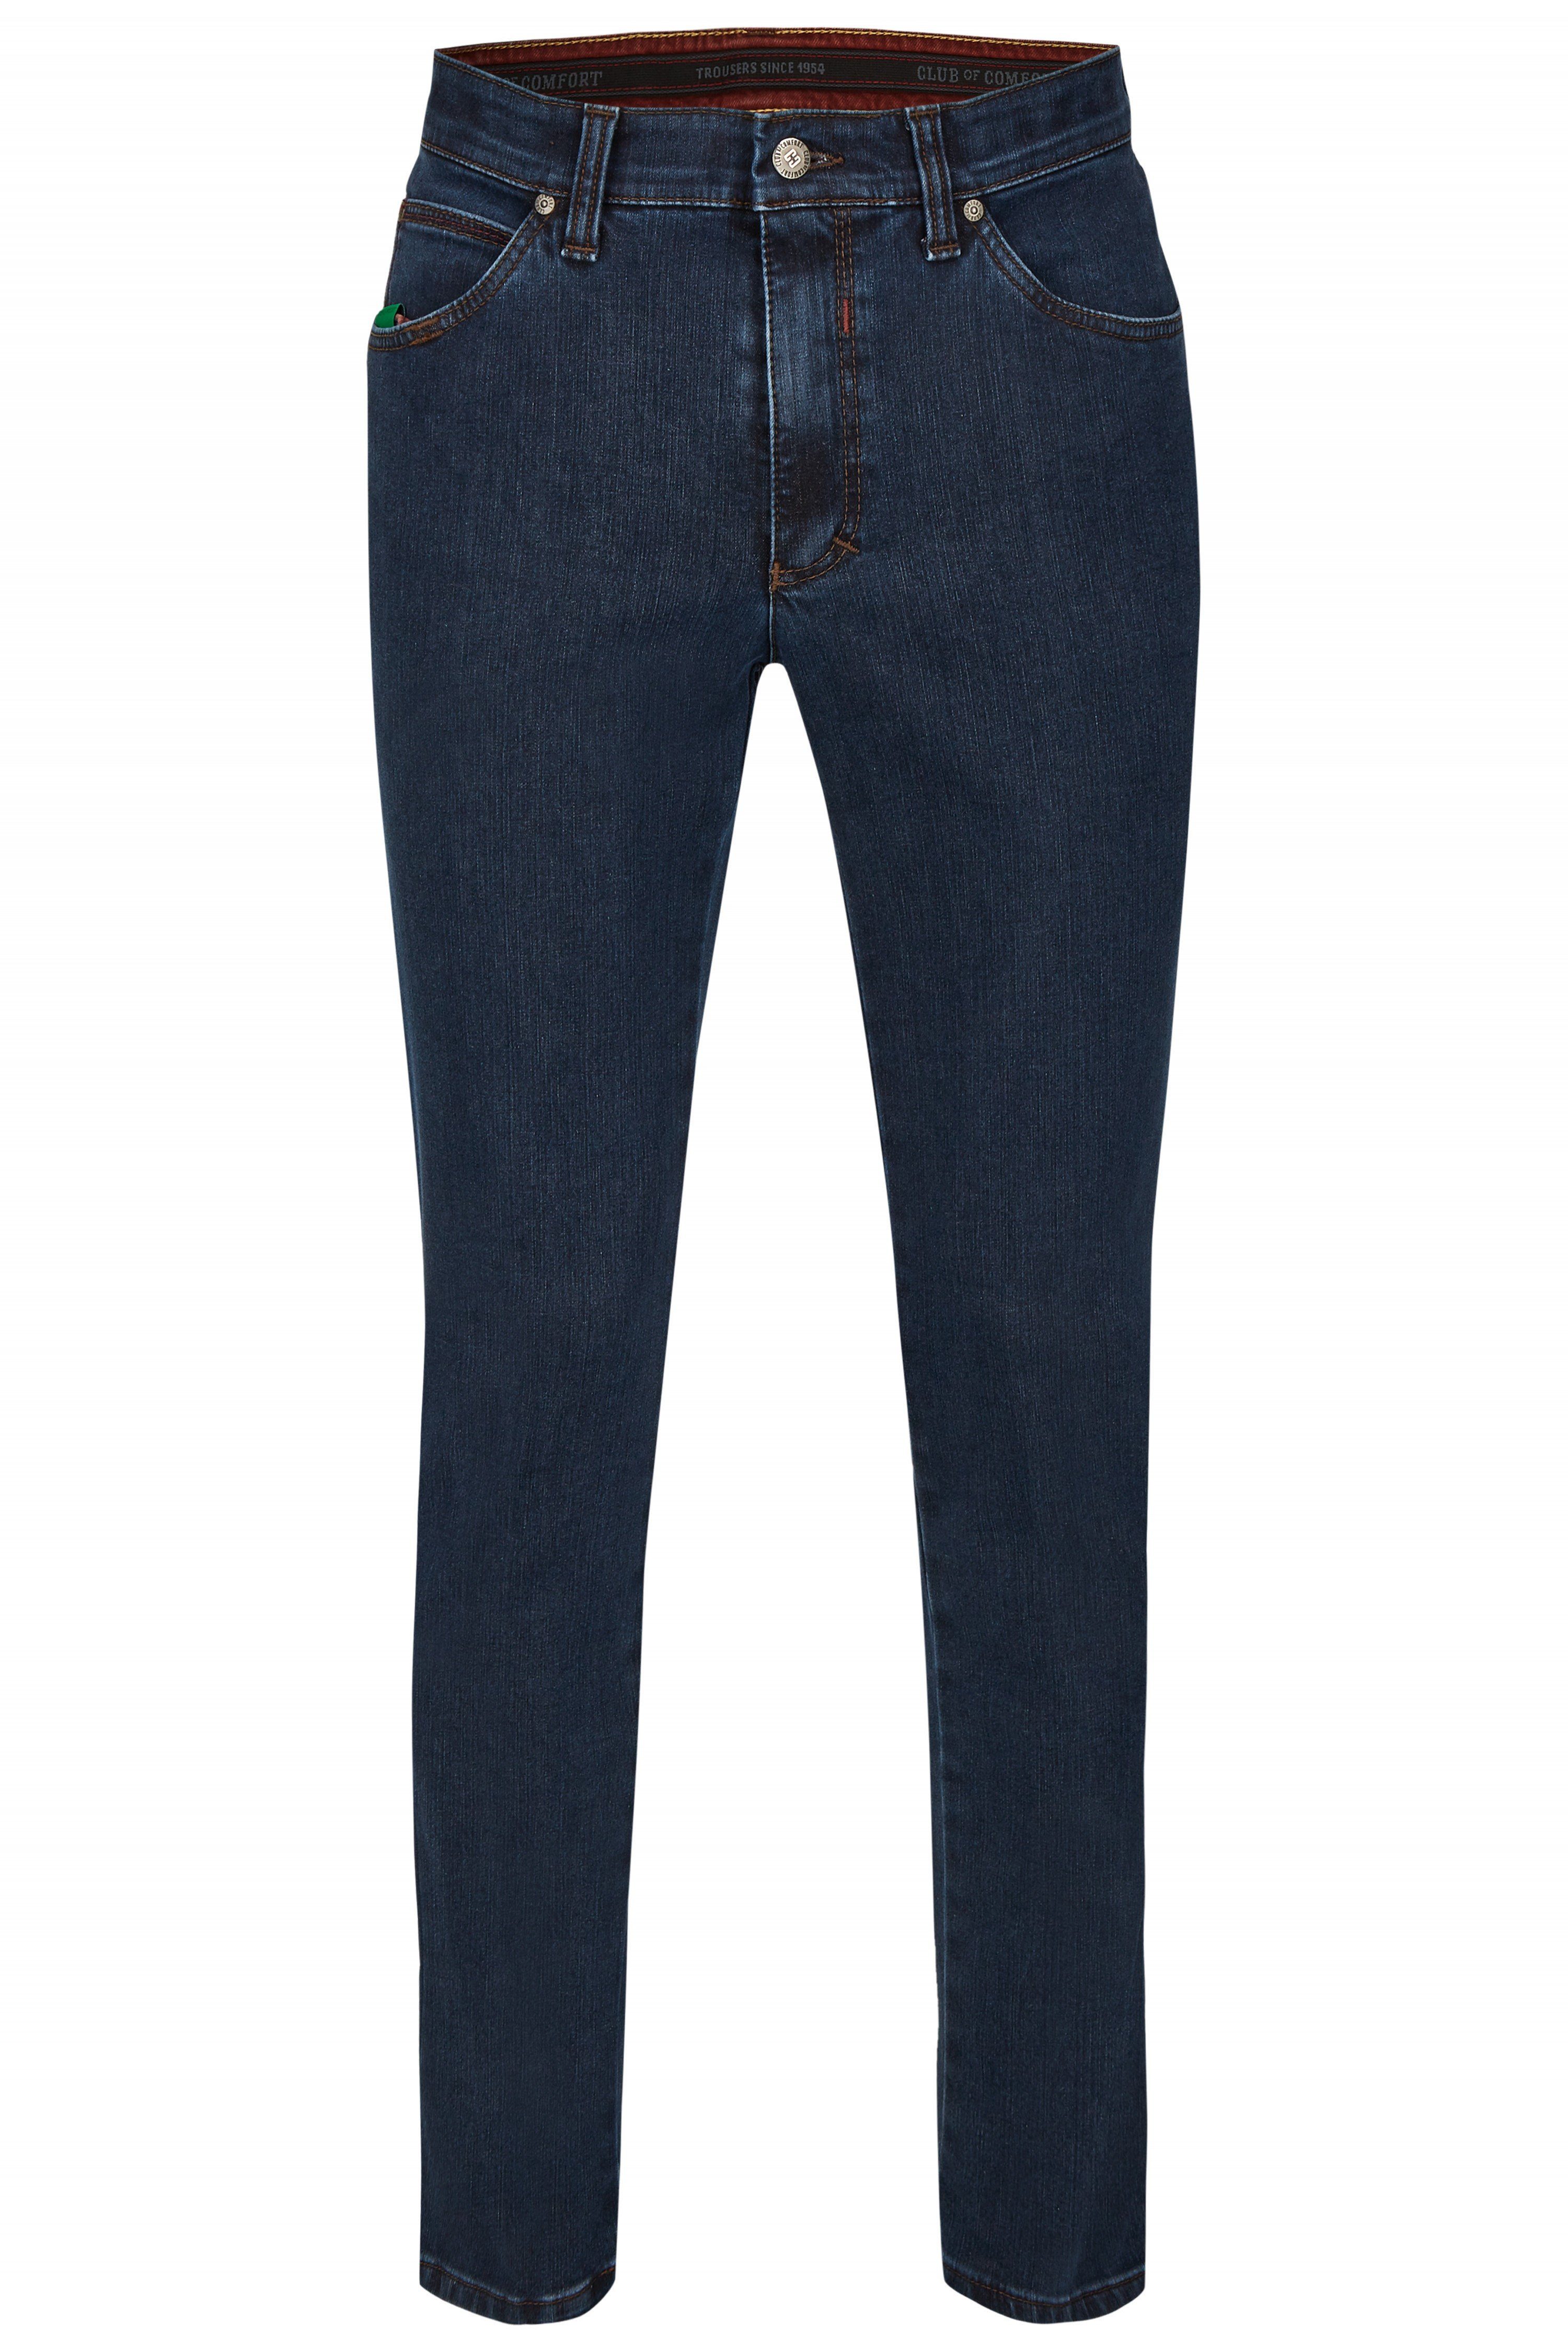 blau Pocket of Mobile mit 6822 Comfort Henry Club extra Slim-fit-Jeans